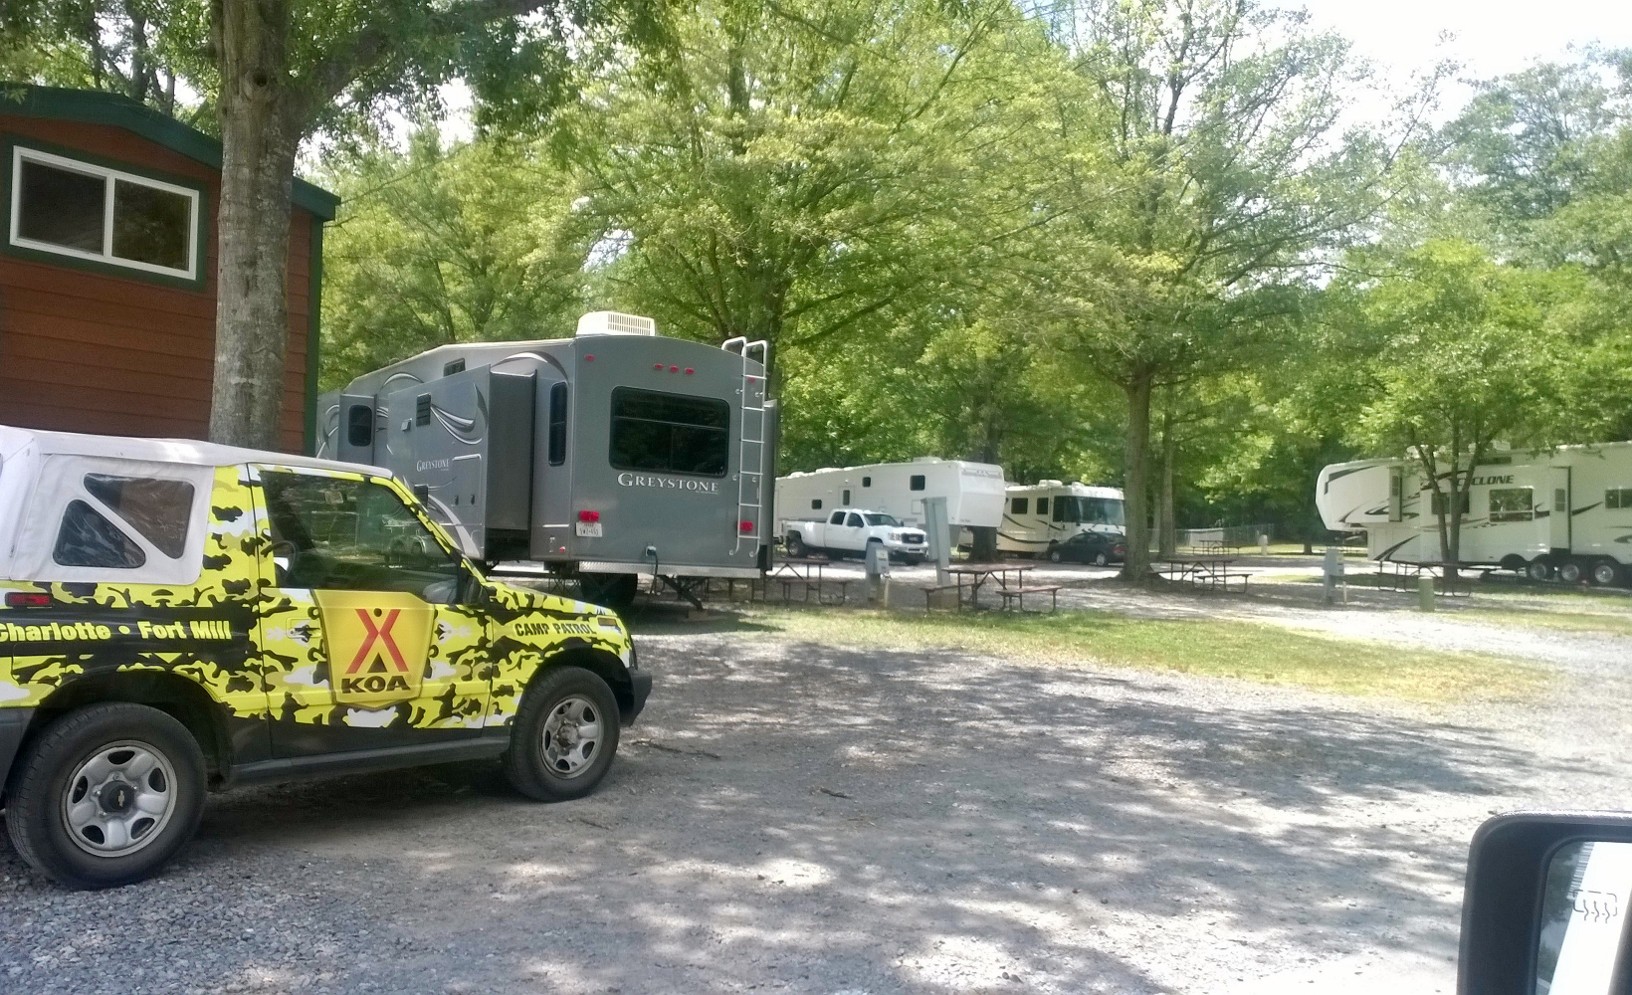 Charlotte / Fort Mill KOA Journey - RV Campground in Fort Mill, SC Charlotte / Fort Mill Koa Journey Reviews